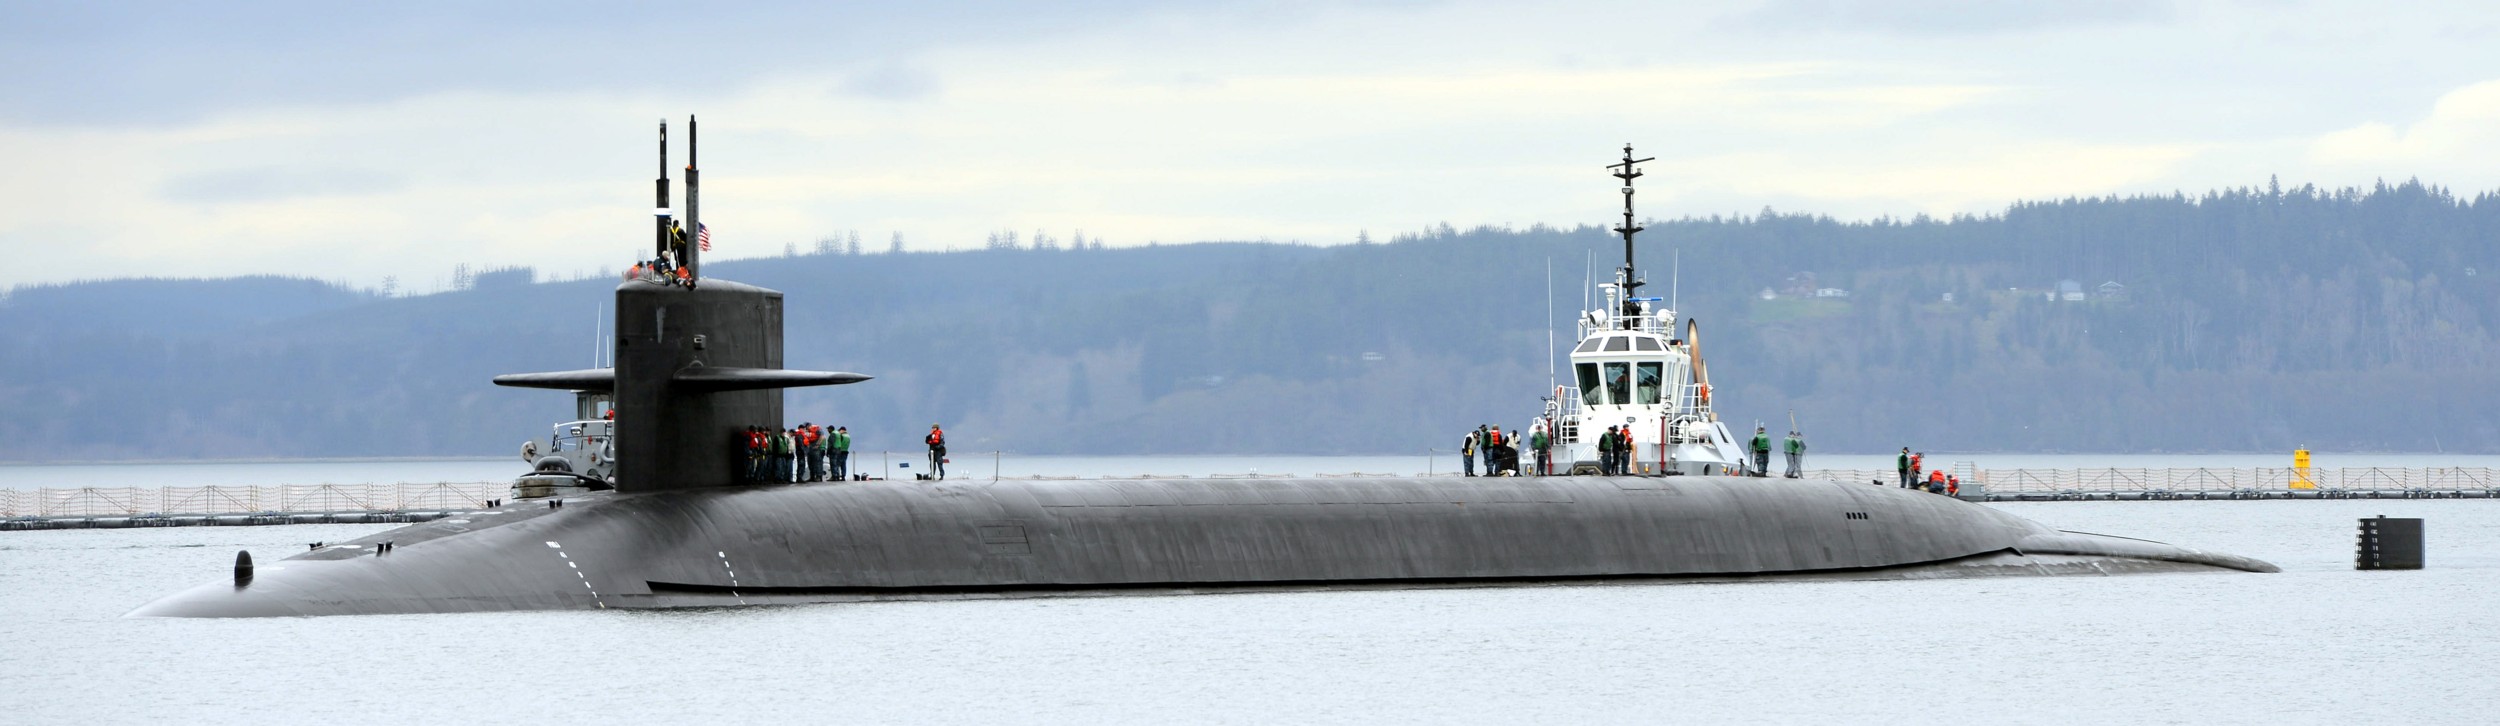 ssbn-731 uss alabama ohio class ballistic missile submarine 2014 13 bremerton washington